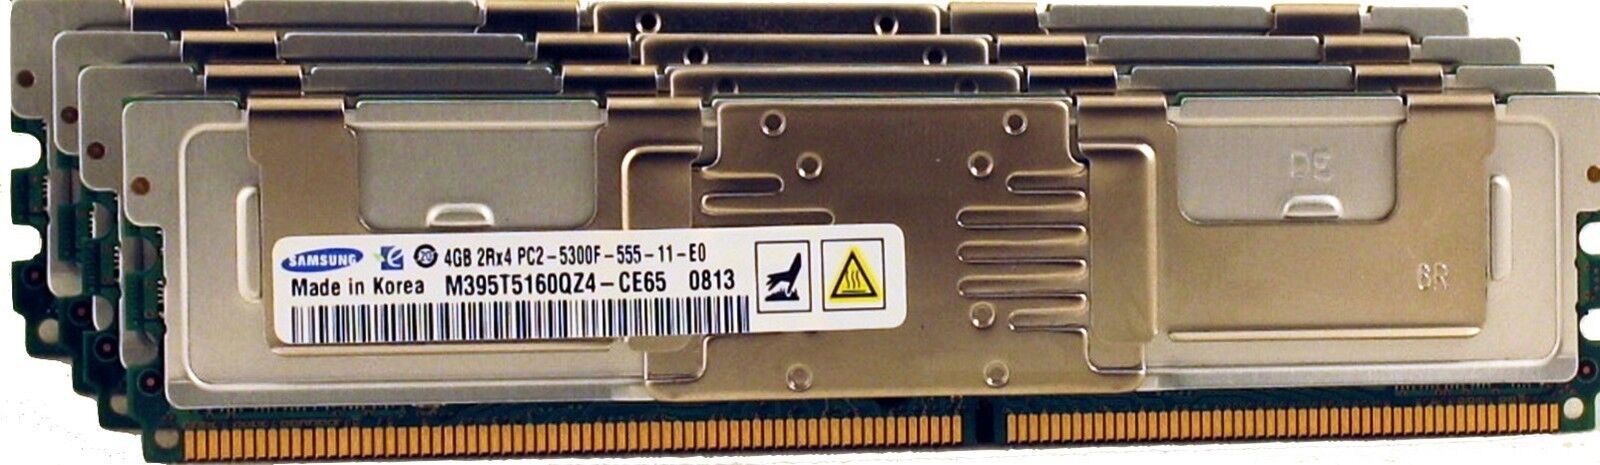 16GB DDR2-667MHz- For Dell Precision Workstation 490, 690, t5400, t7400 & R5400